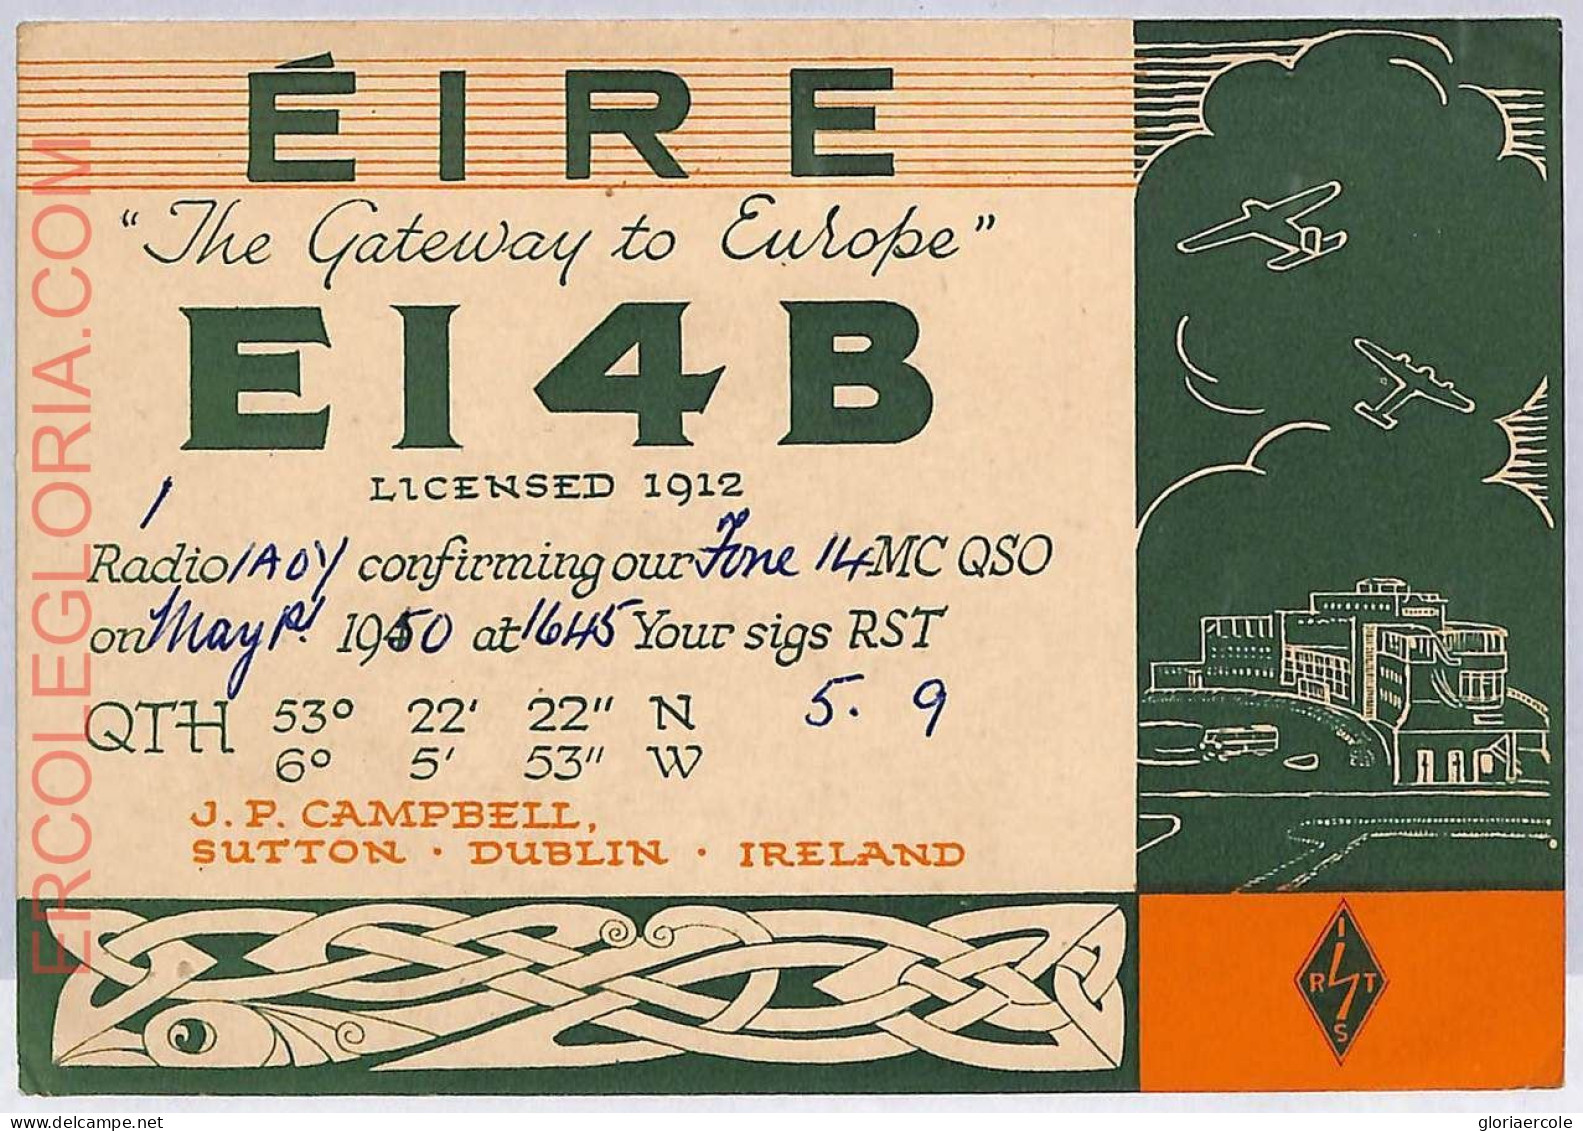 Ad9190 - IRELAND - RADIO FREQUENCY CARD - Dublin -  1951 - Radio